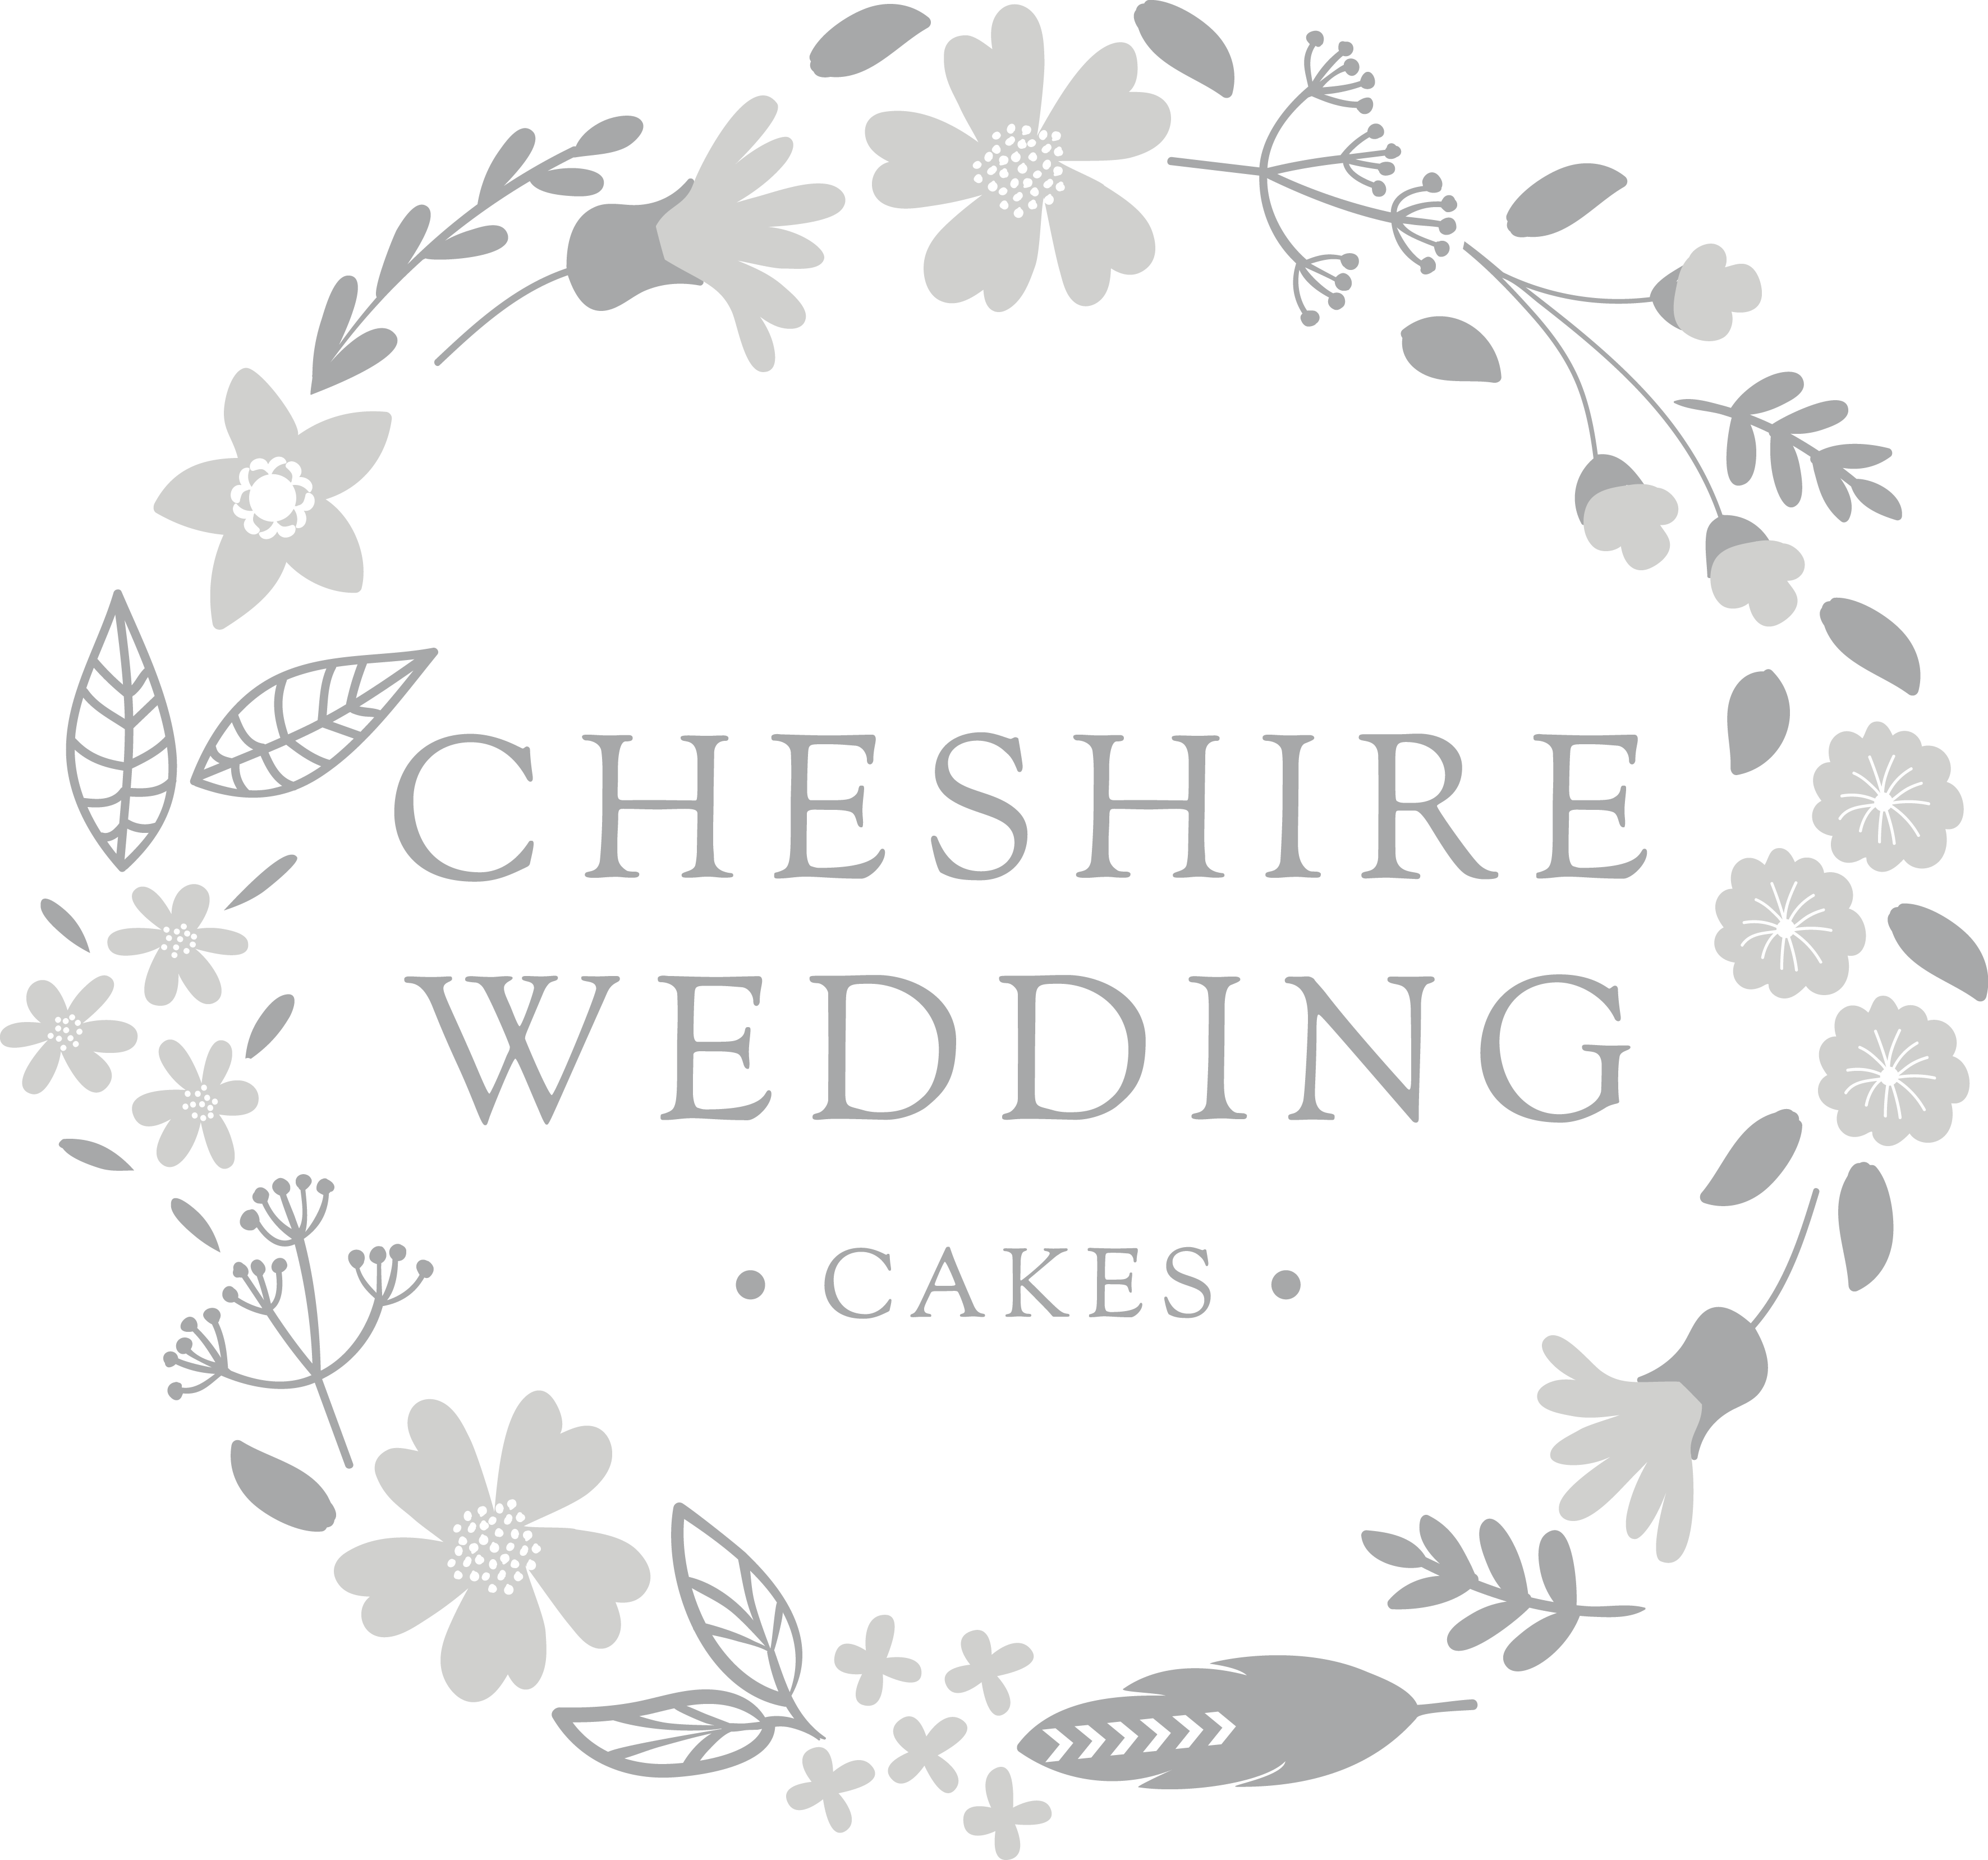 Cheshire Wedding Cakes